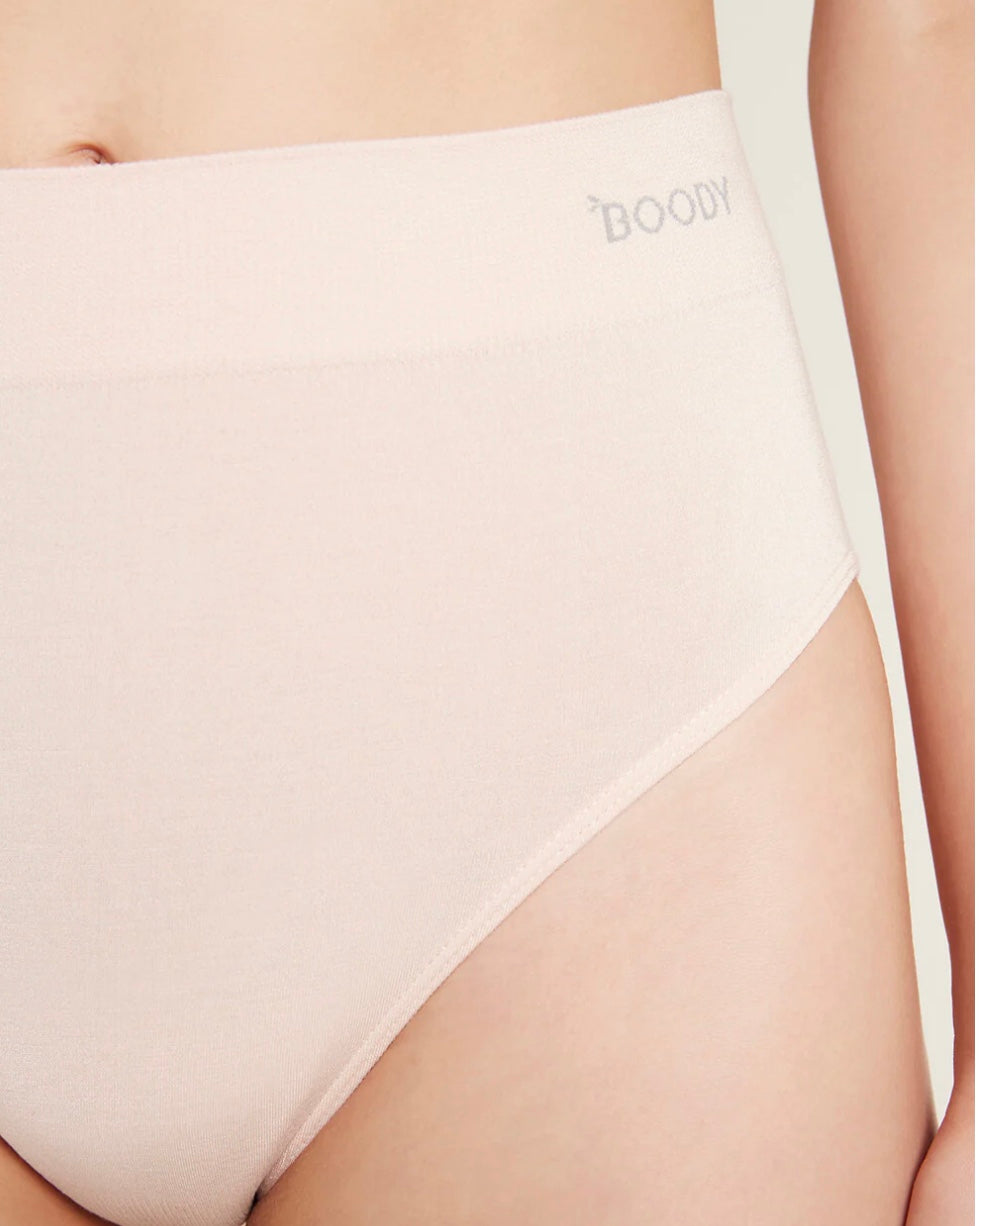 Boody Organic Bamboo Full Brief Underwear